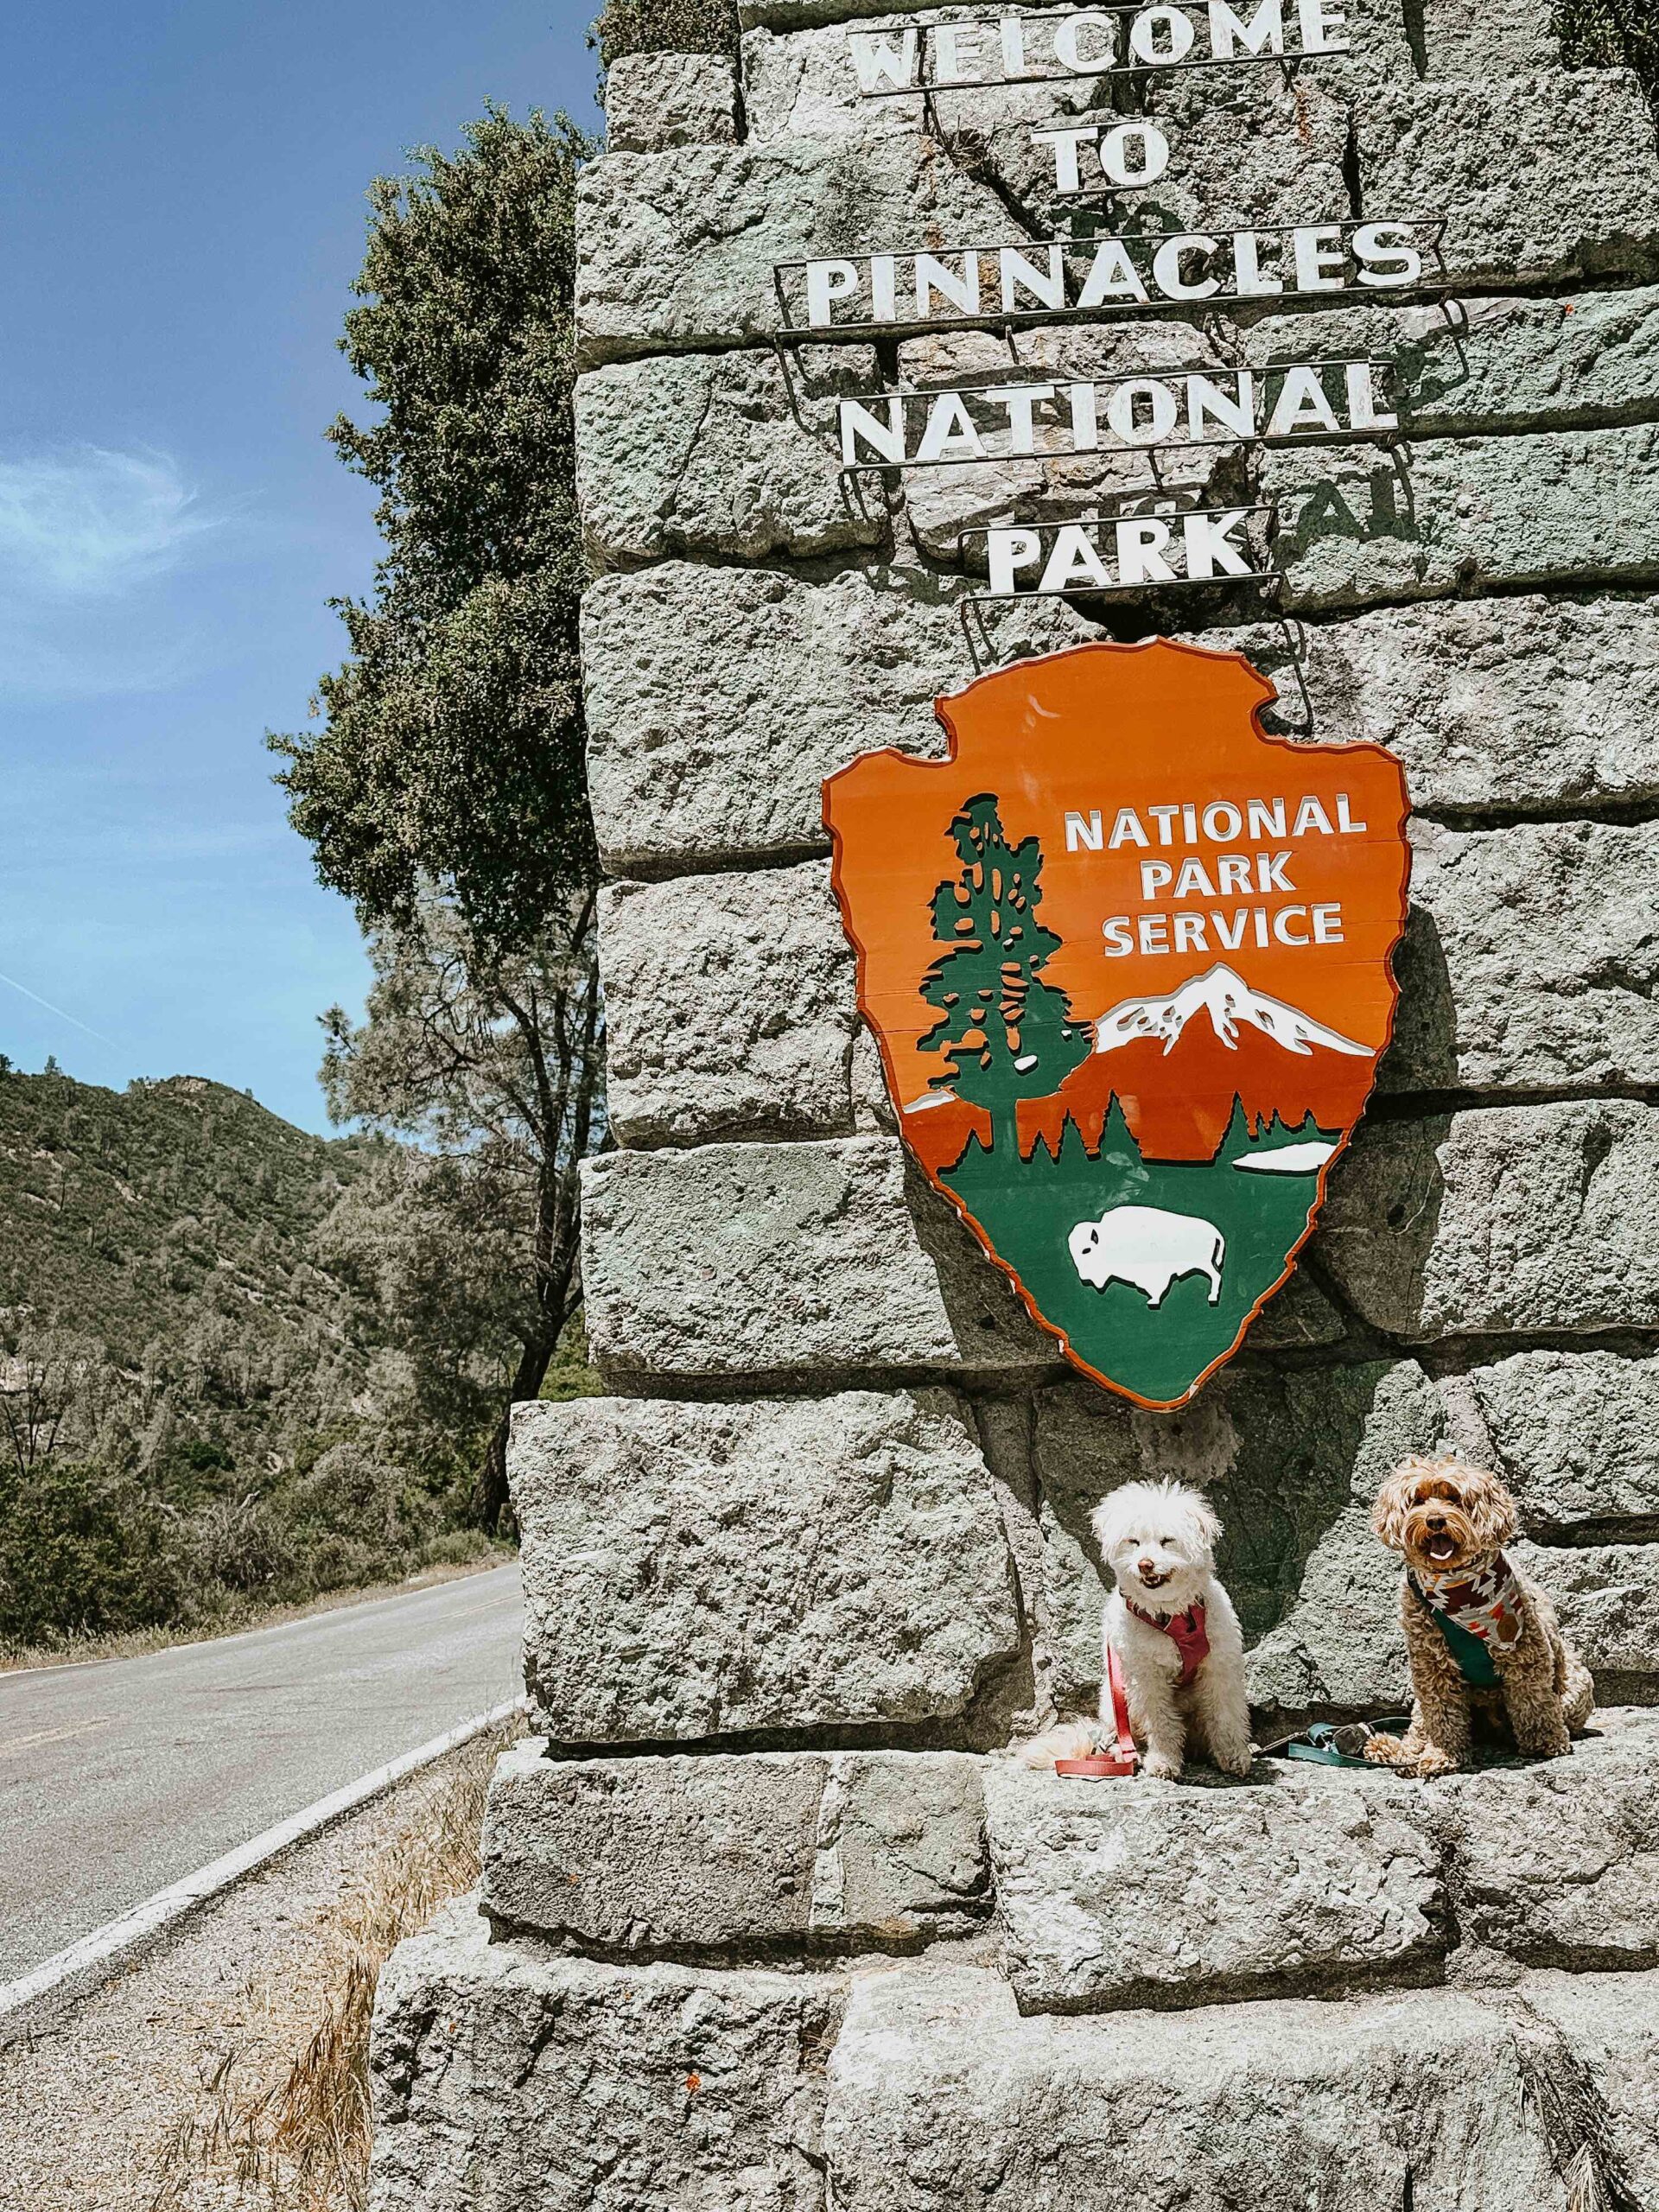 Dog friendly Pinnacles National Park road trip